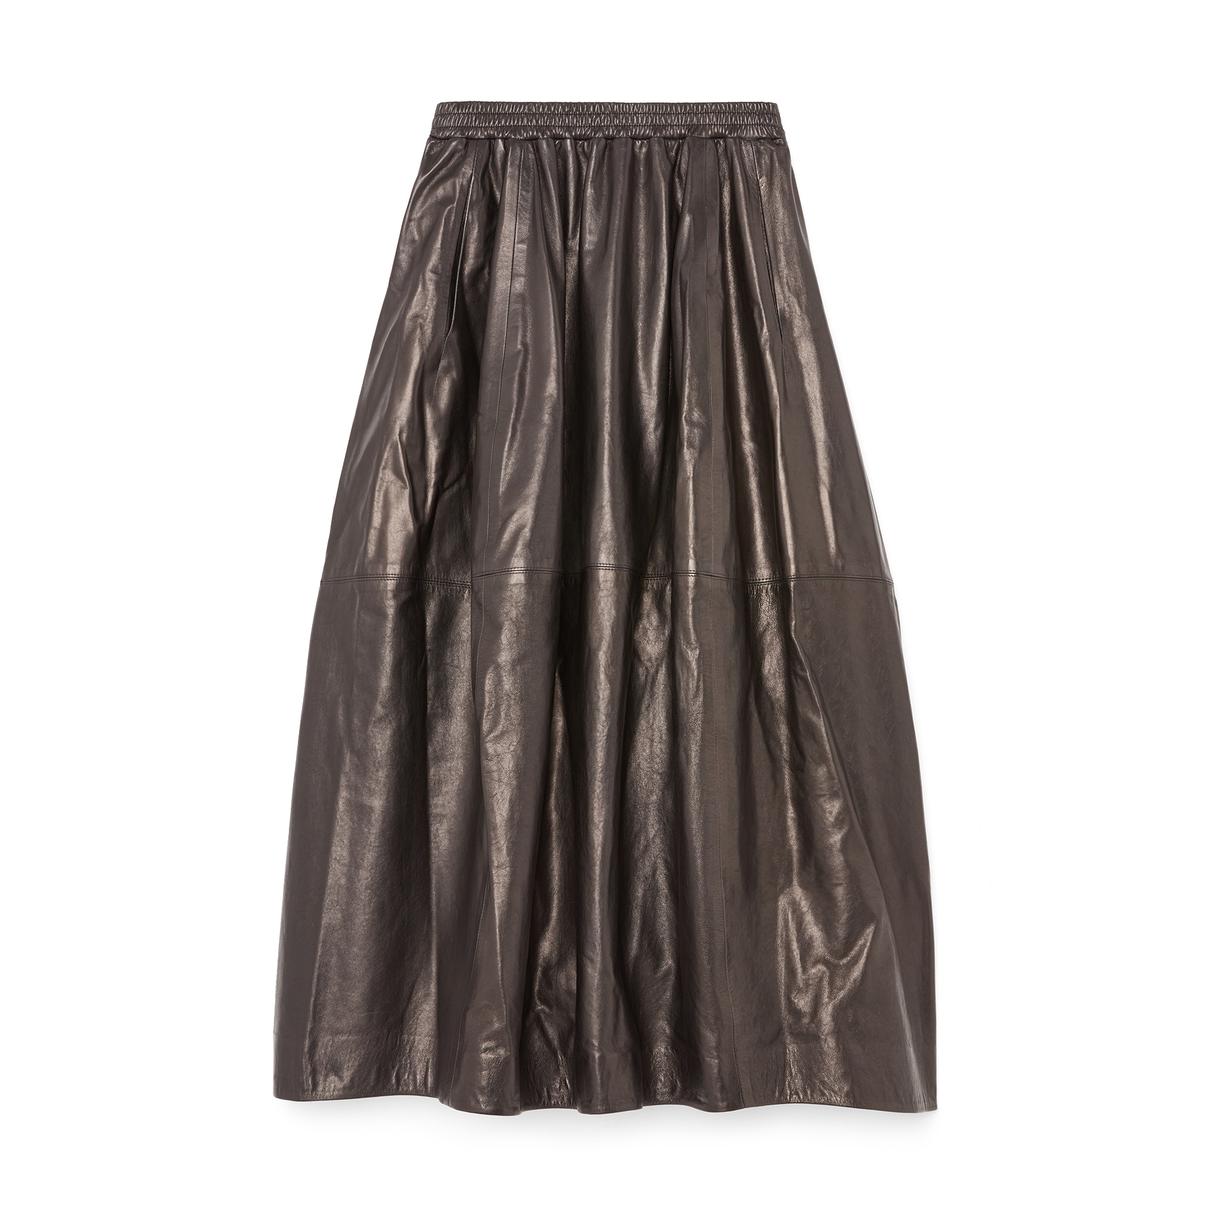 HEIRLOME Varo Leather Skirt